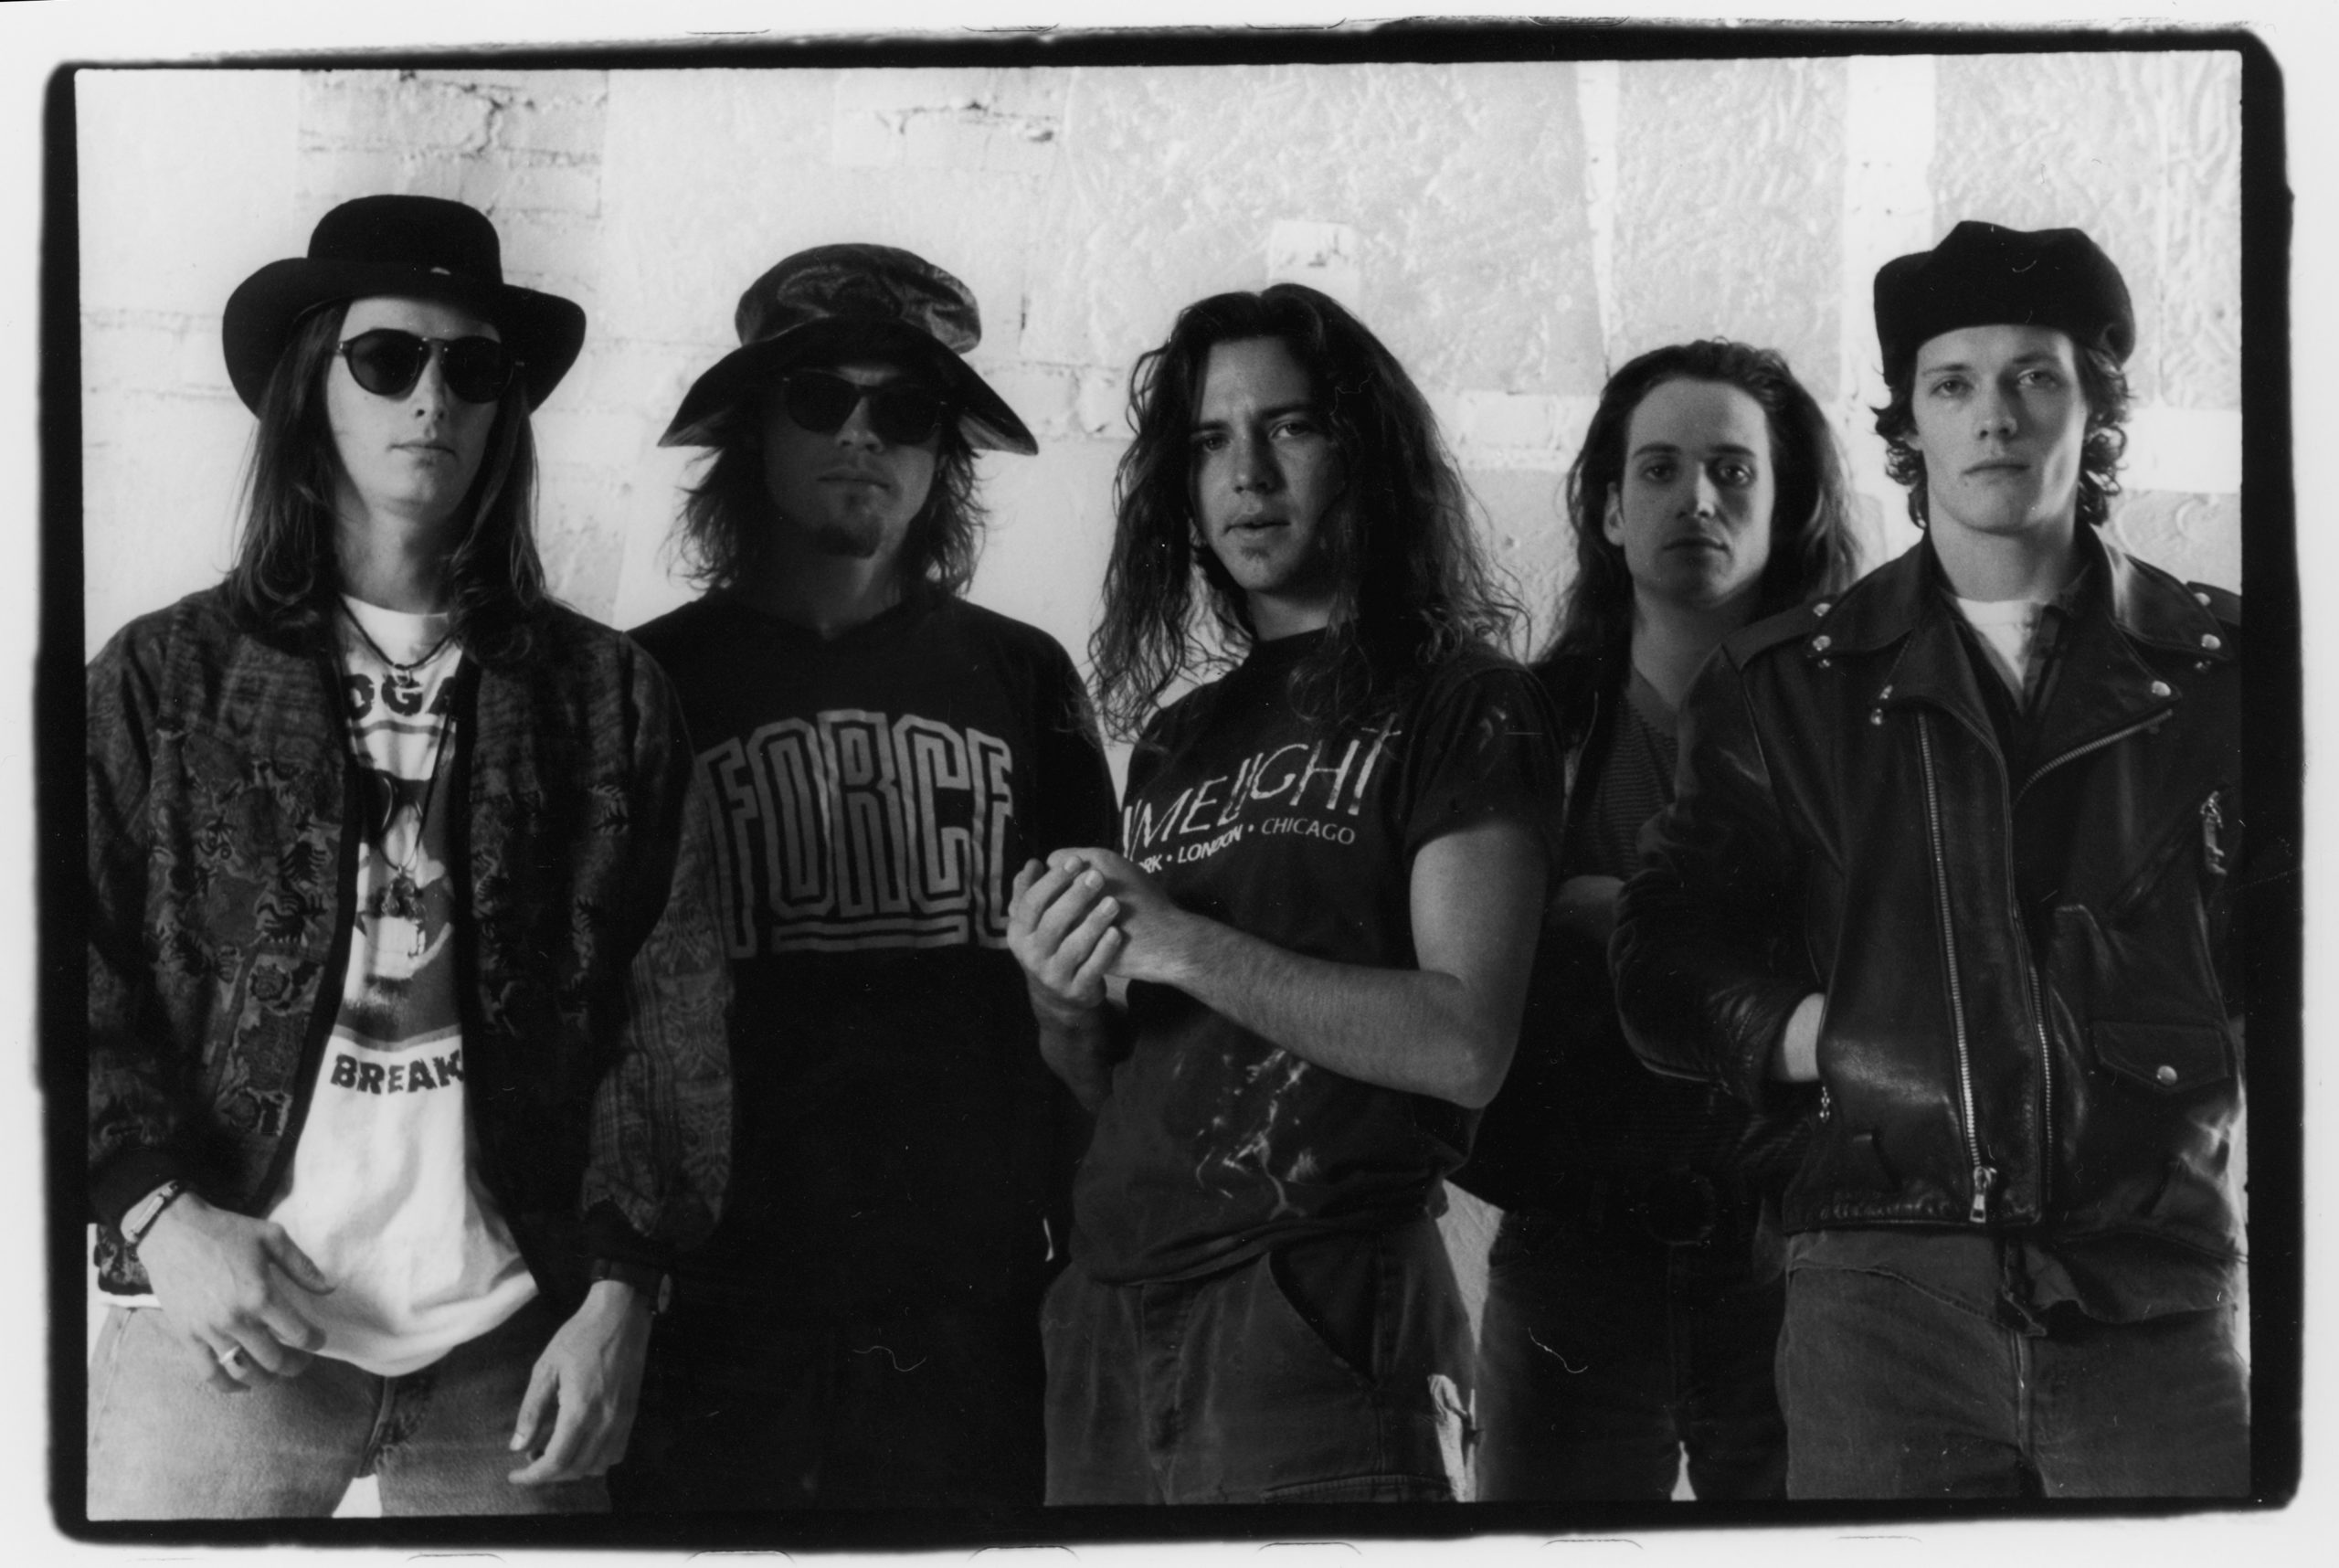 Pearl Jam Debut 'Dark Matter' Songs On 'The Howard Stern Show'